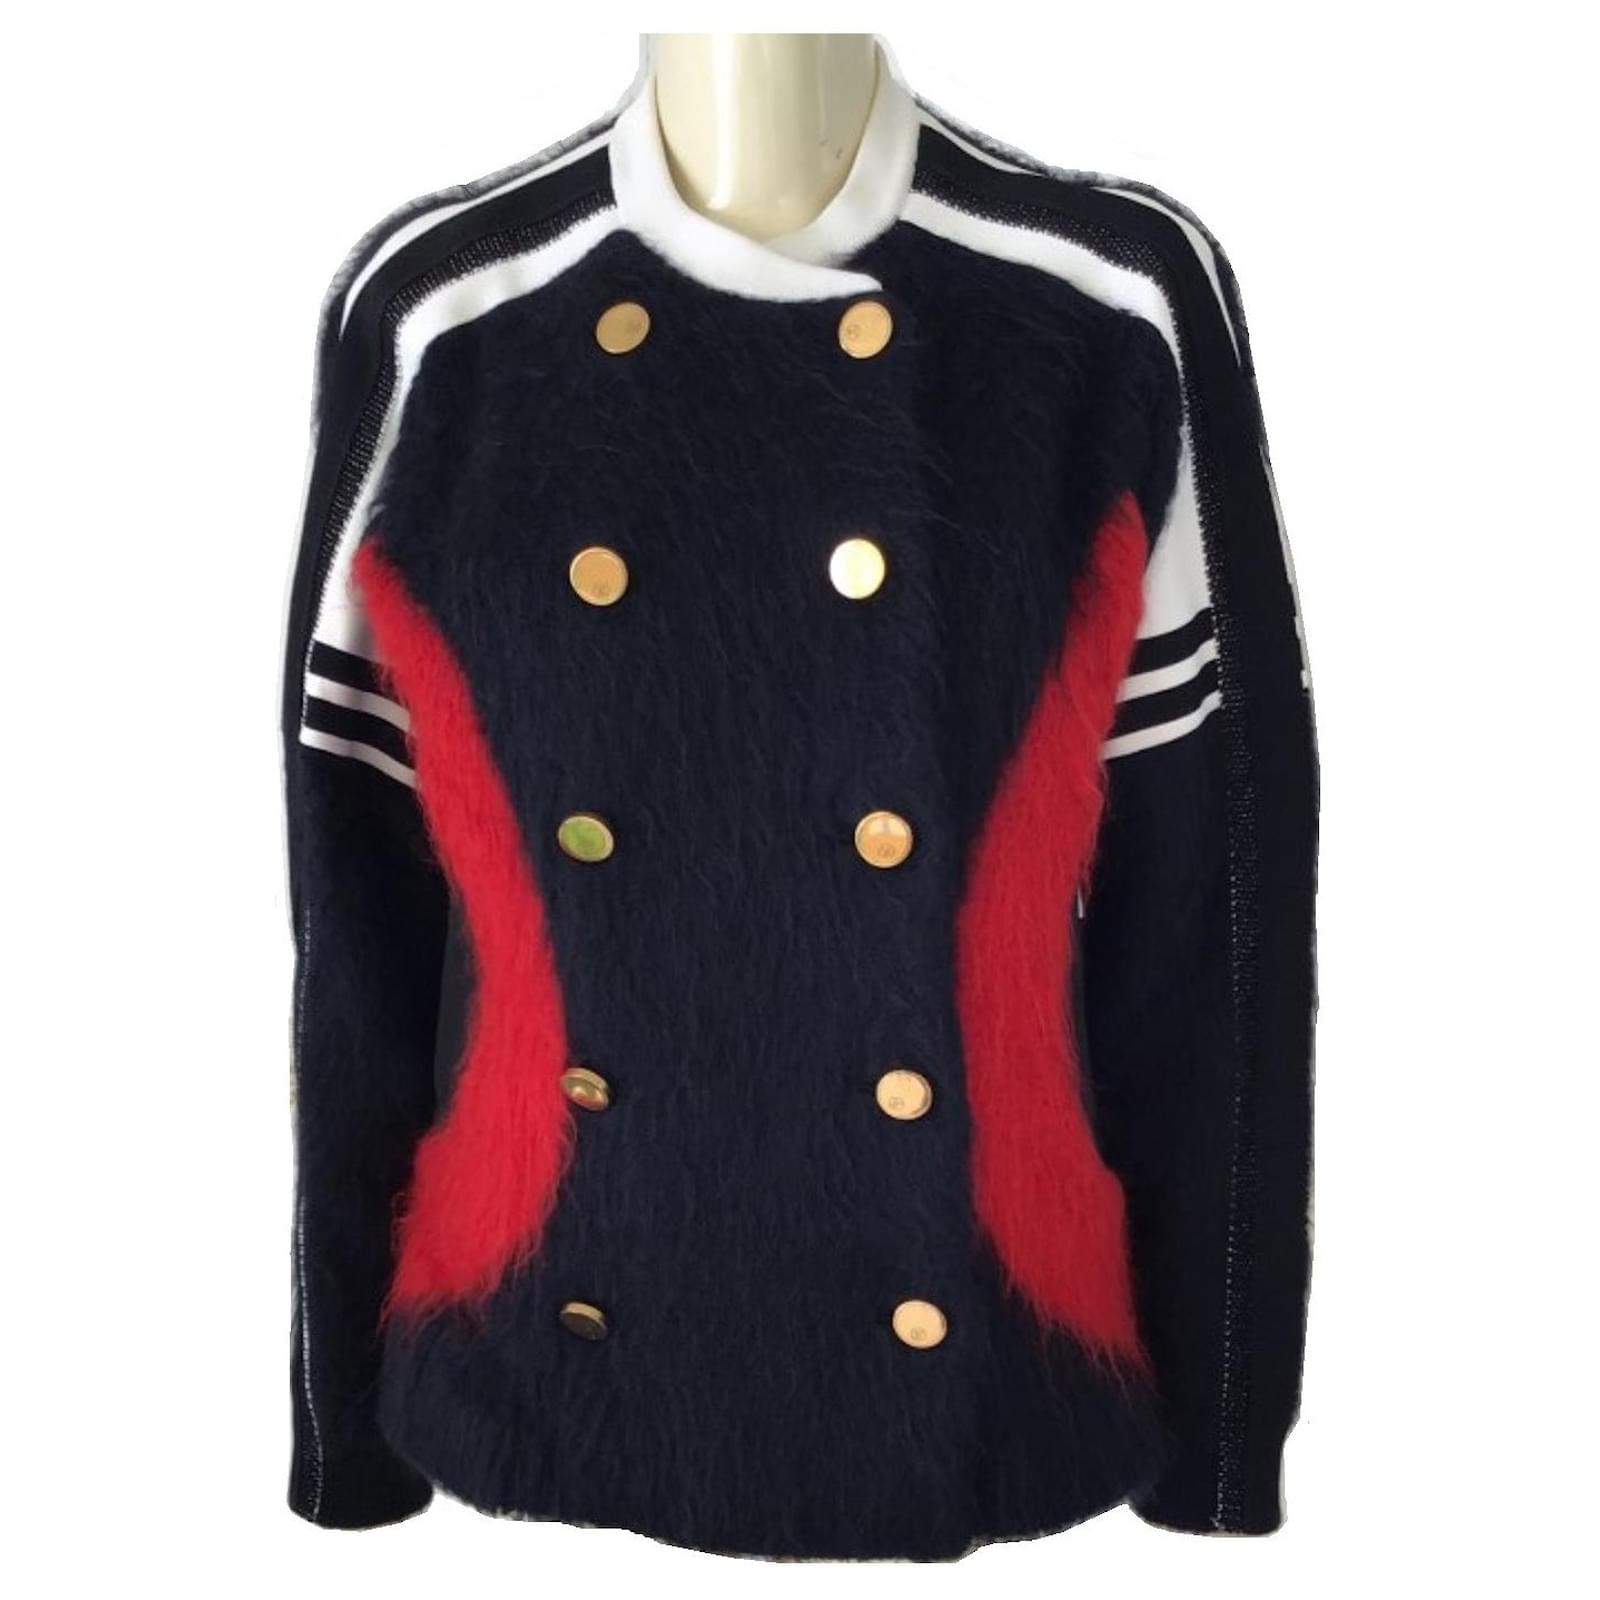 Louis Vuitton Jacket Coat Multiple colors Black White Red Wool